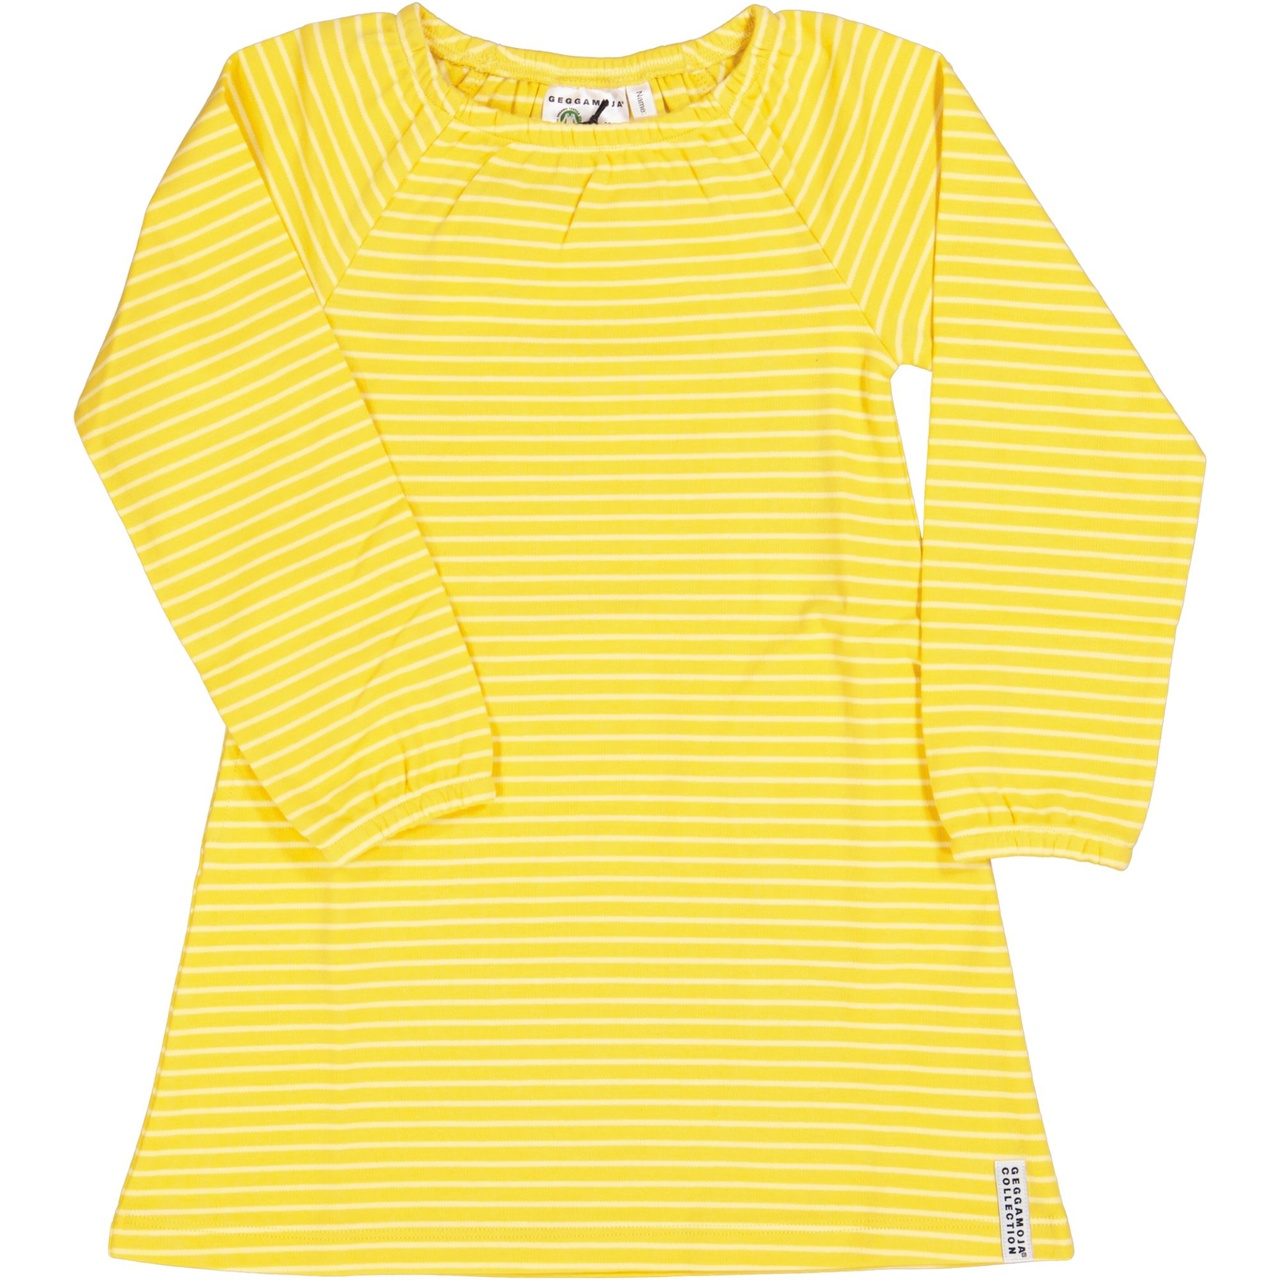 Singoalla dress D.yellow/yellow 134/140